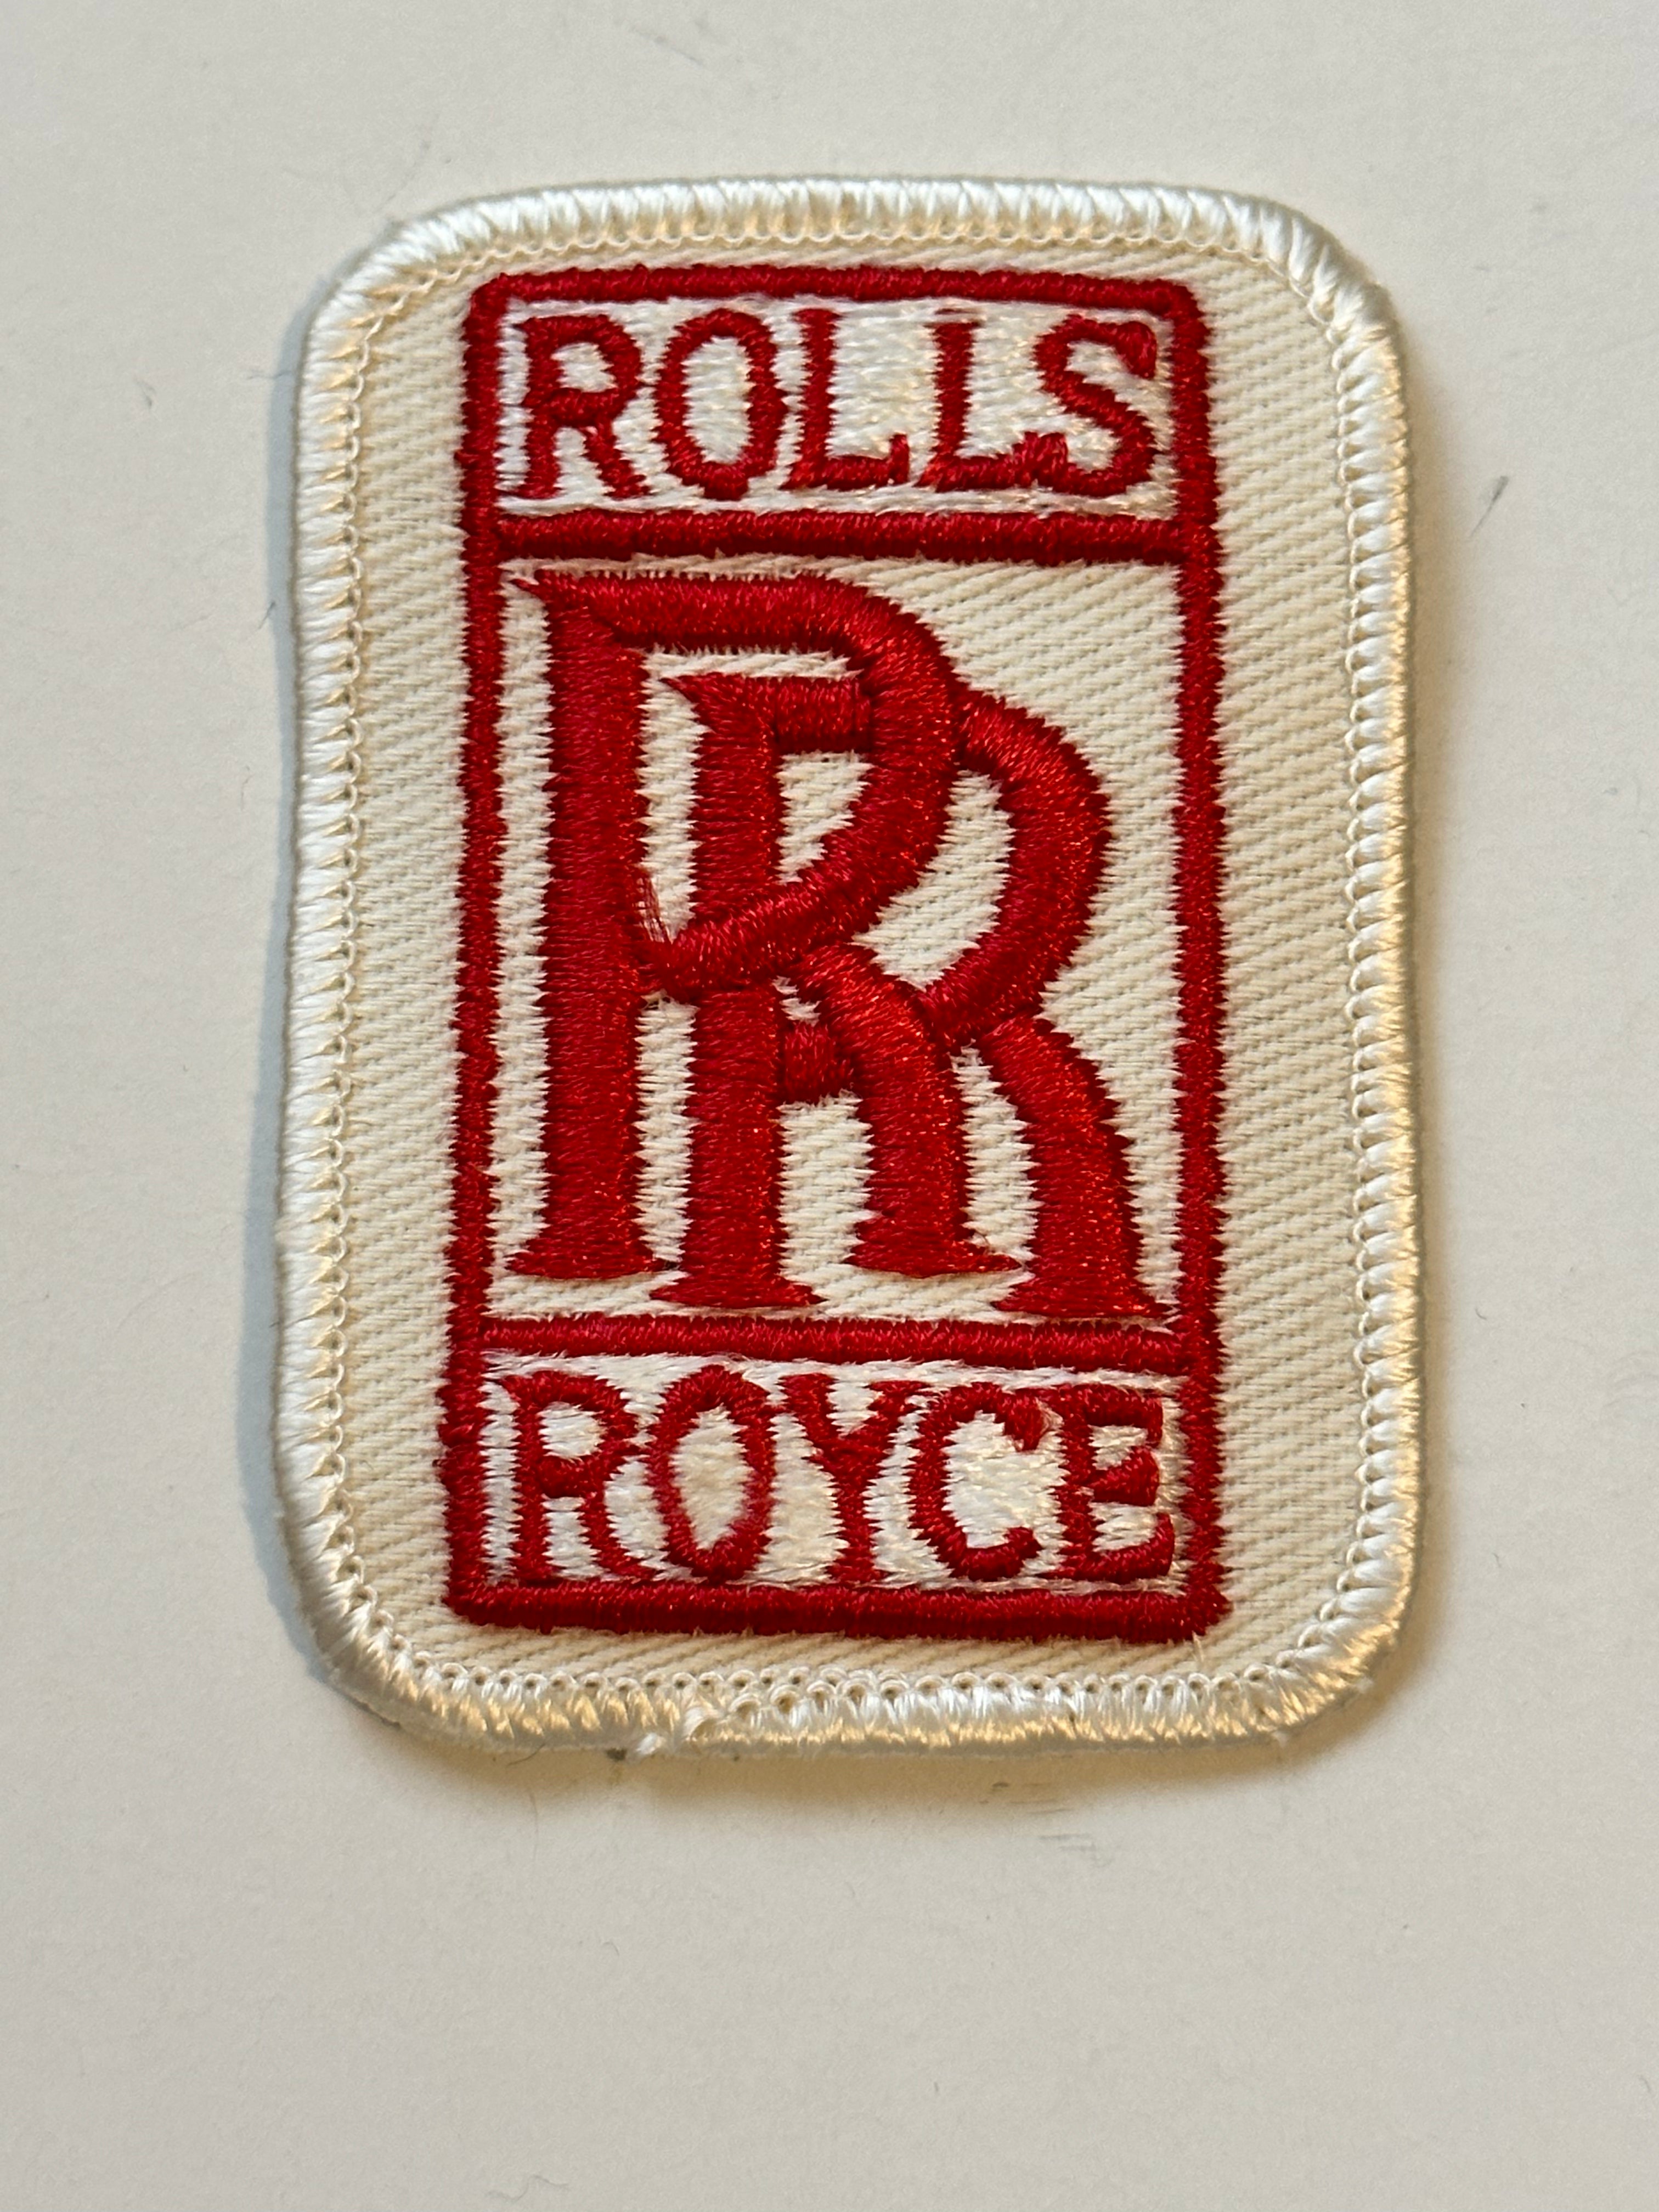 Rolls Royce rare original vintage patch 1980s